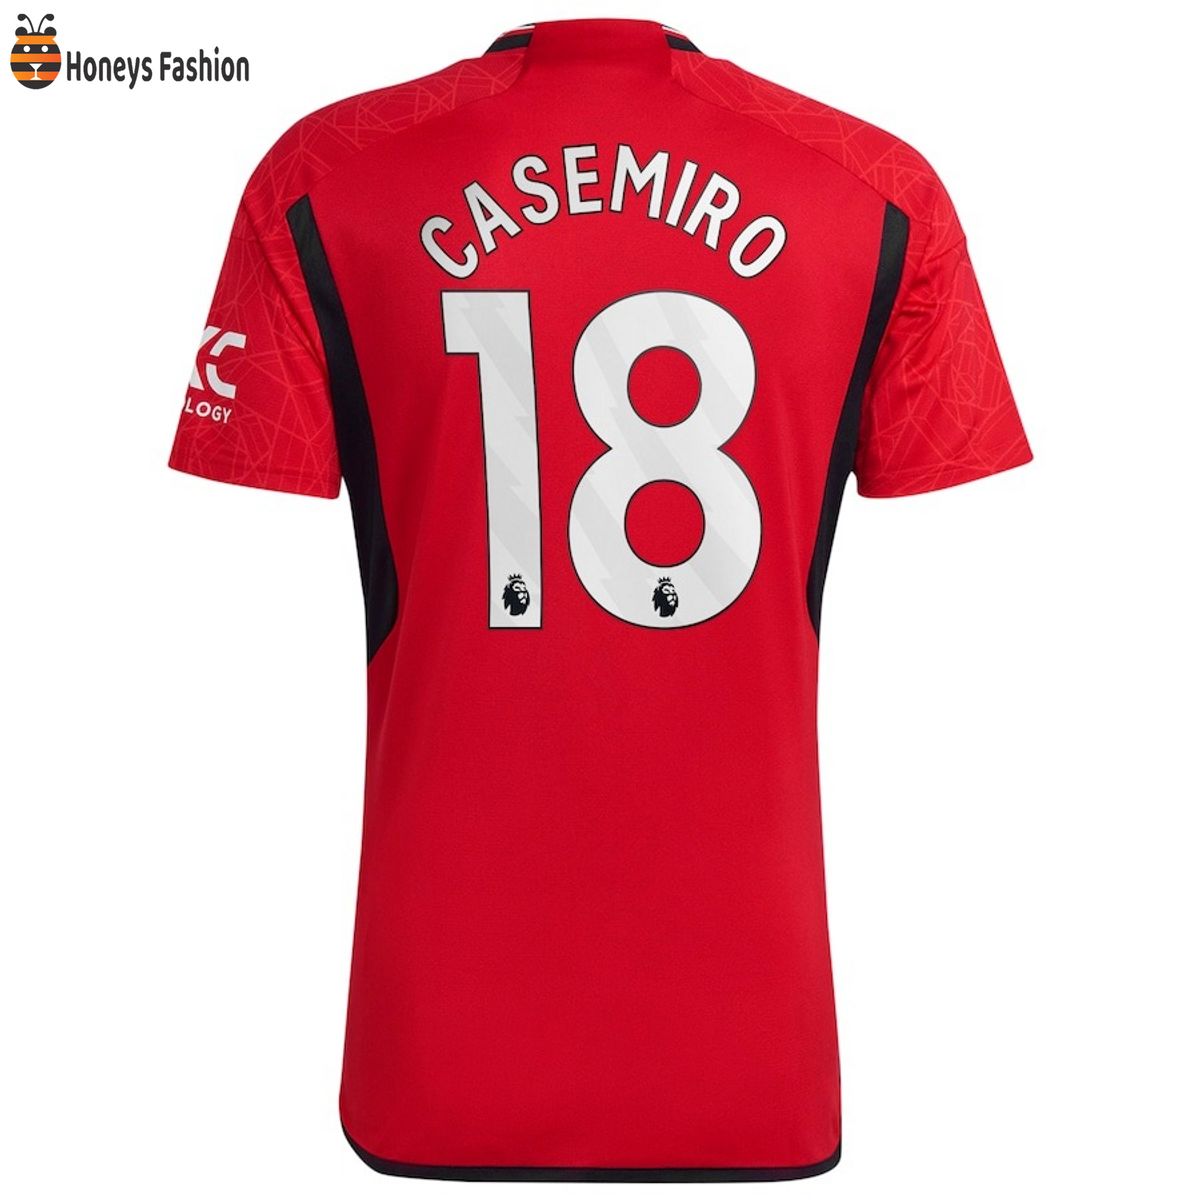 Casemiro 18 Manchester United Premier League 23-24 Jersey